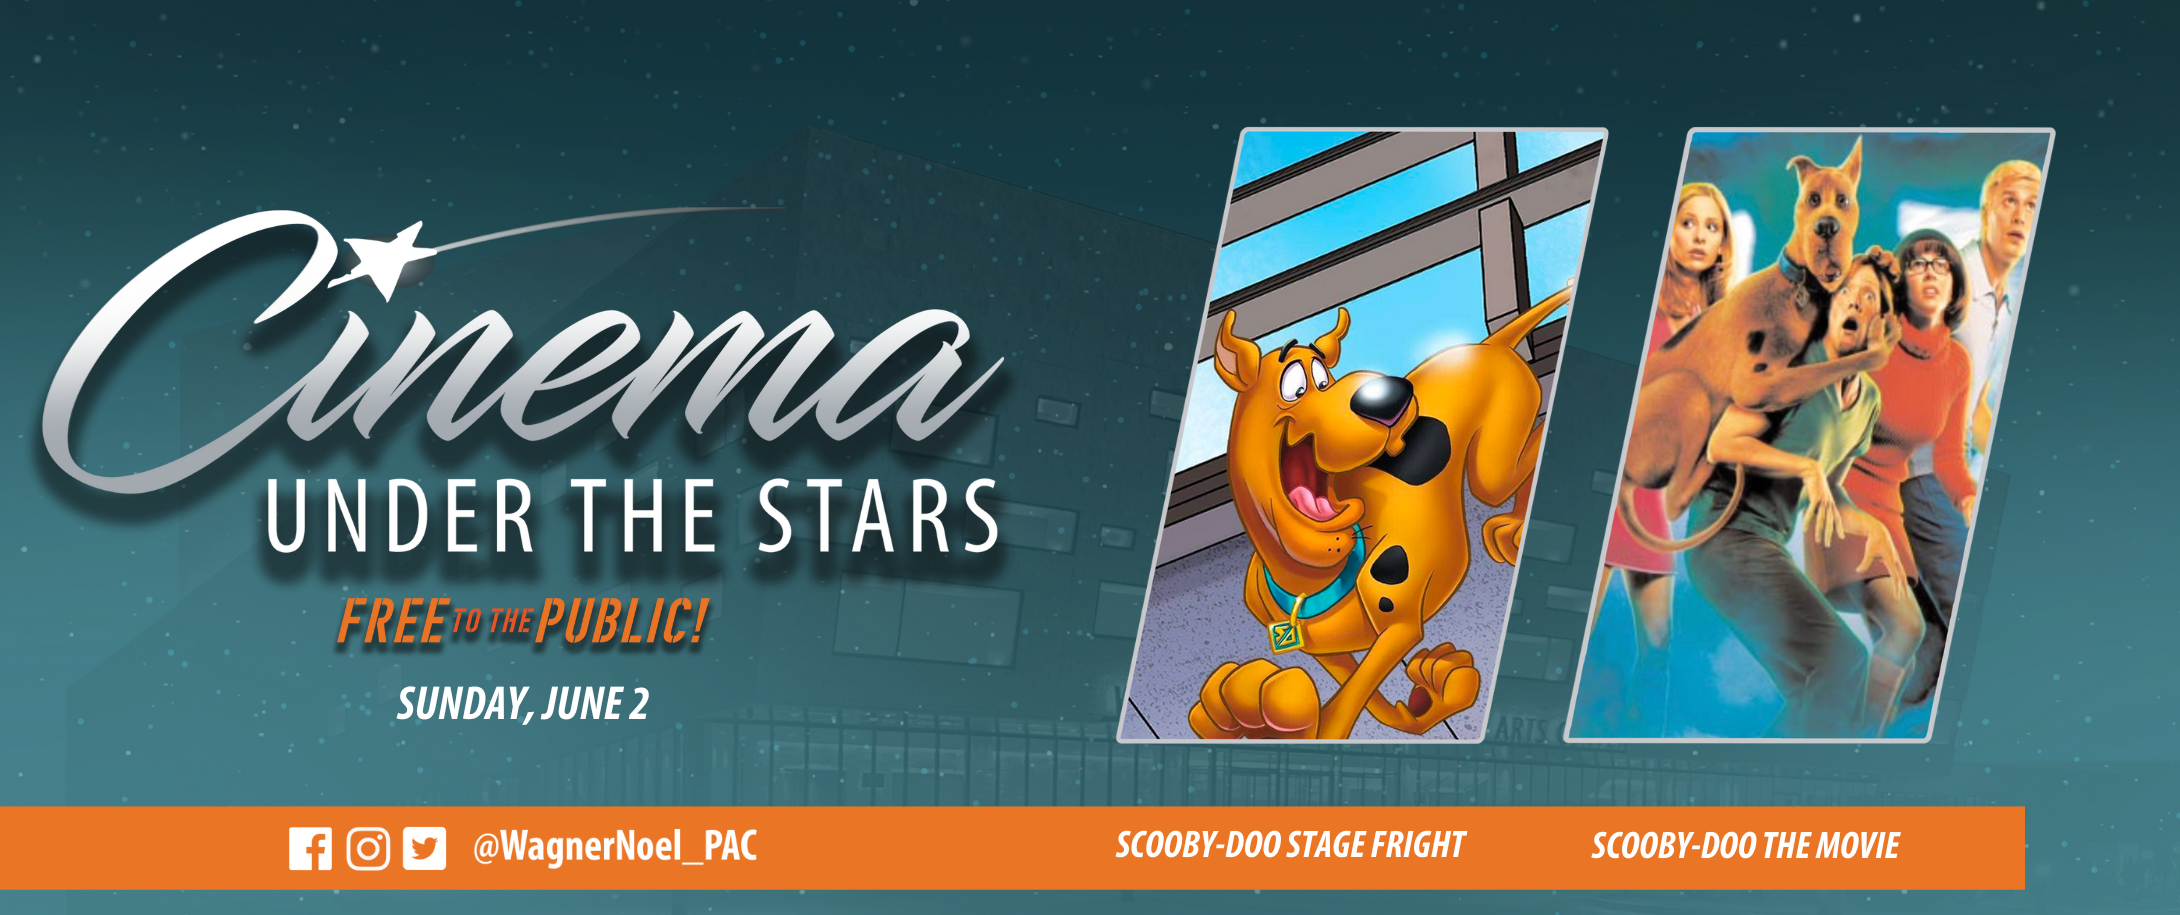 Cinema Under the Stars - Scooby Doo